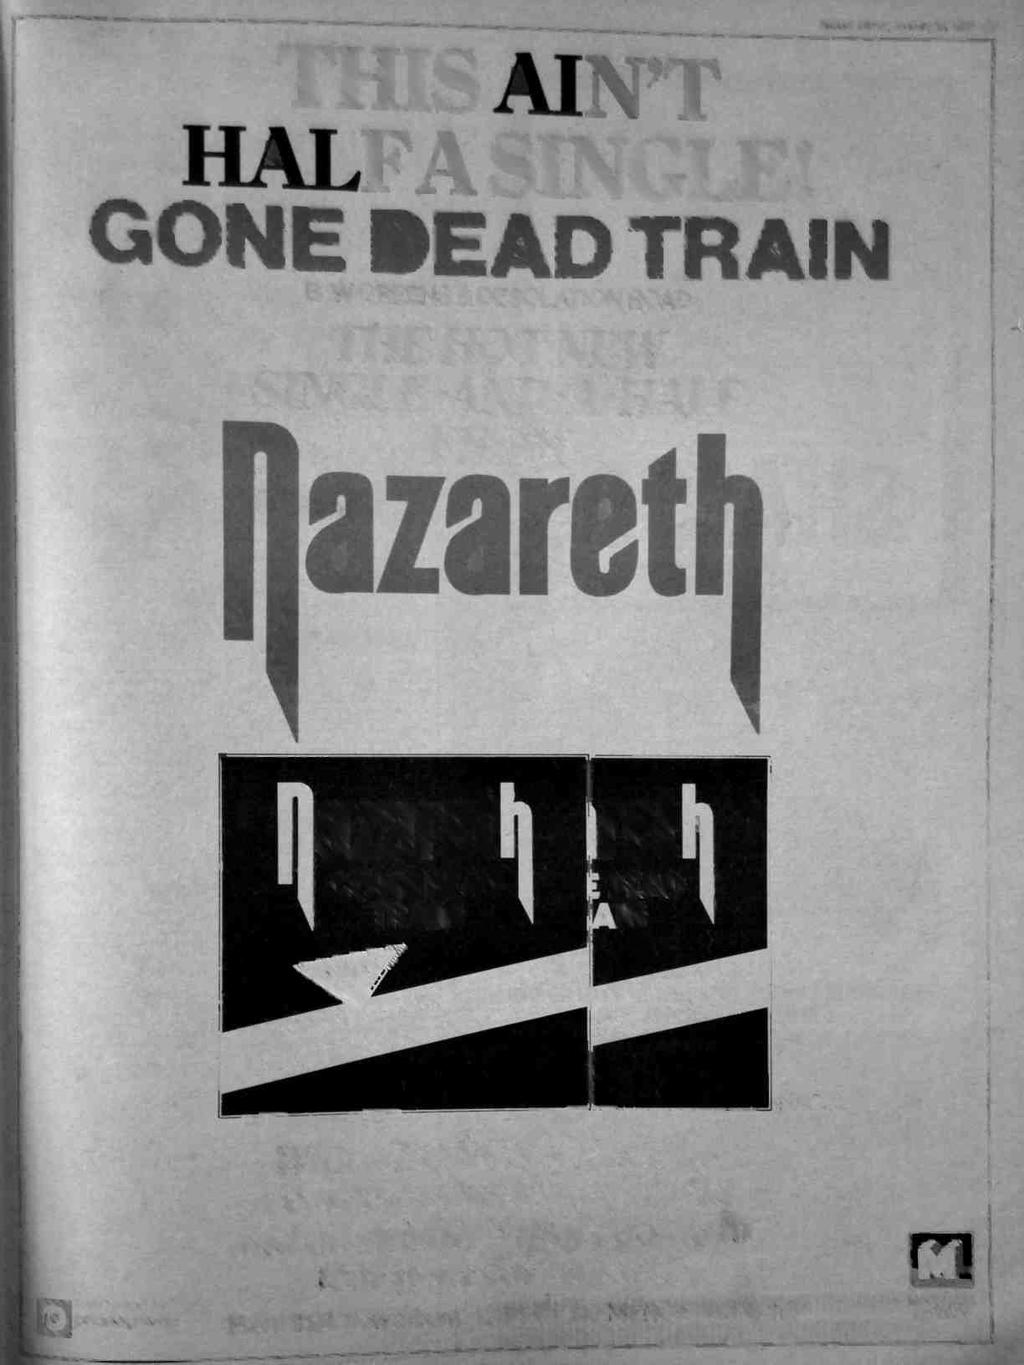 THS N'T Record herrar, January 28. 1978 Z7 FA SNGLE!